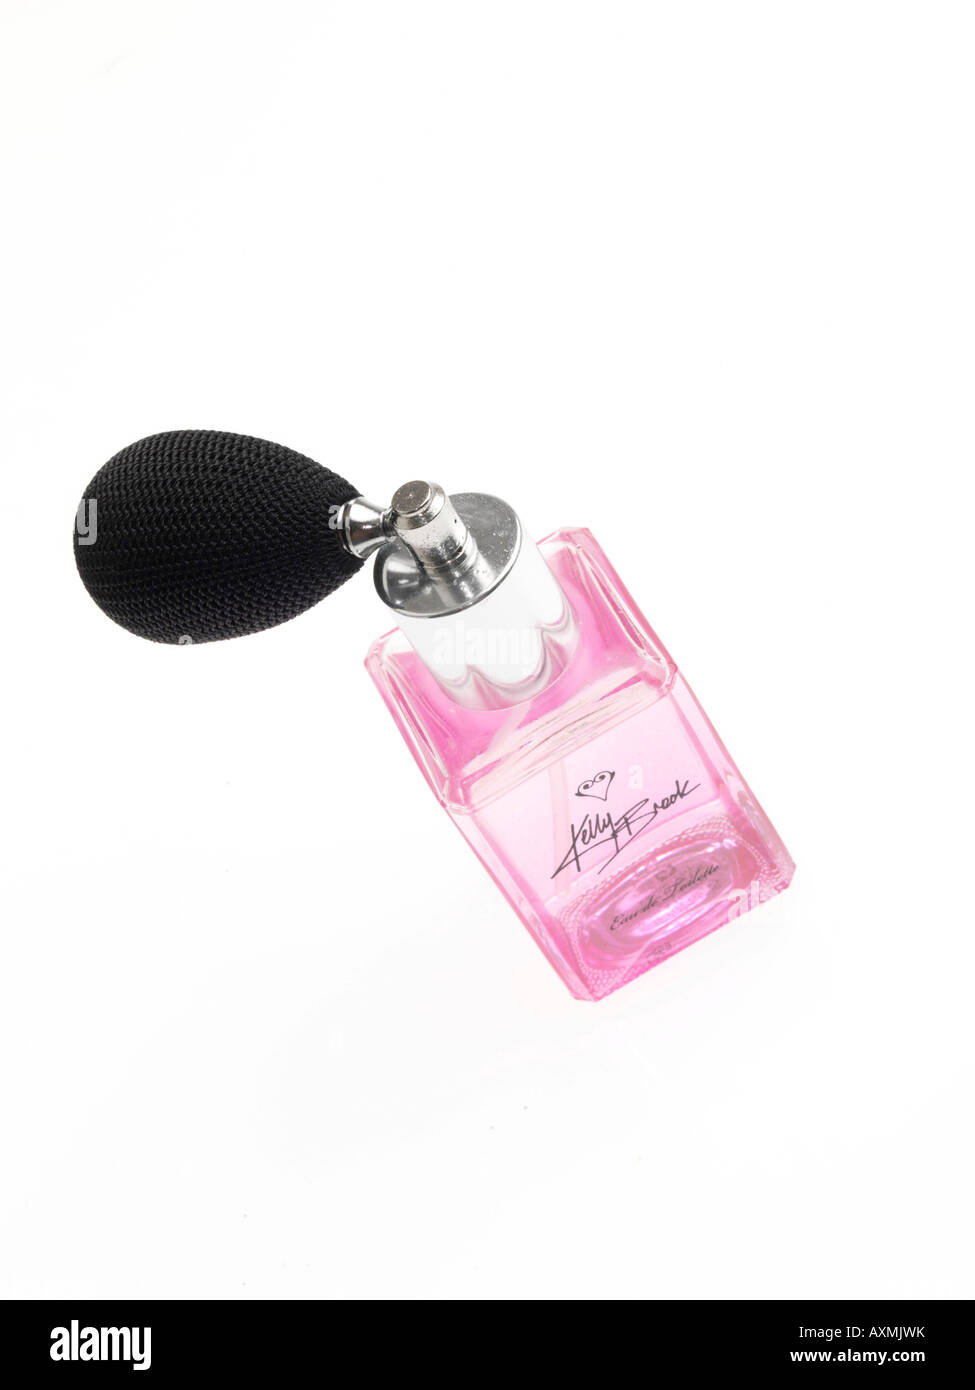 Kelly Brook Perfume on Sale, 52% OFF | xevietnam.com